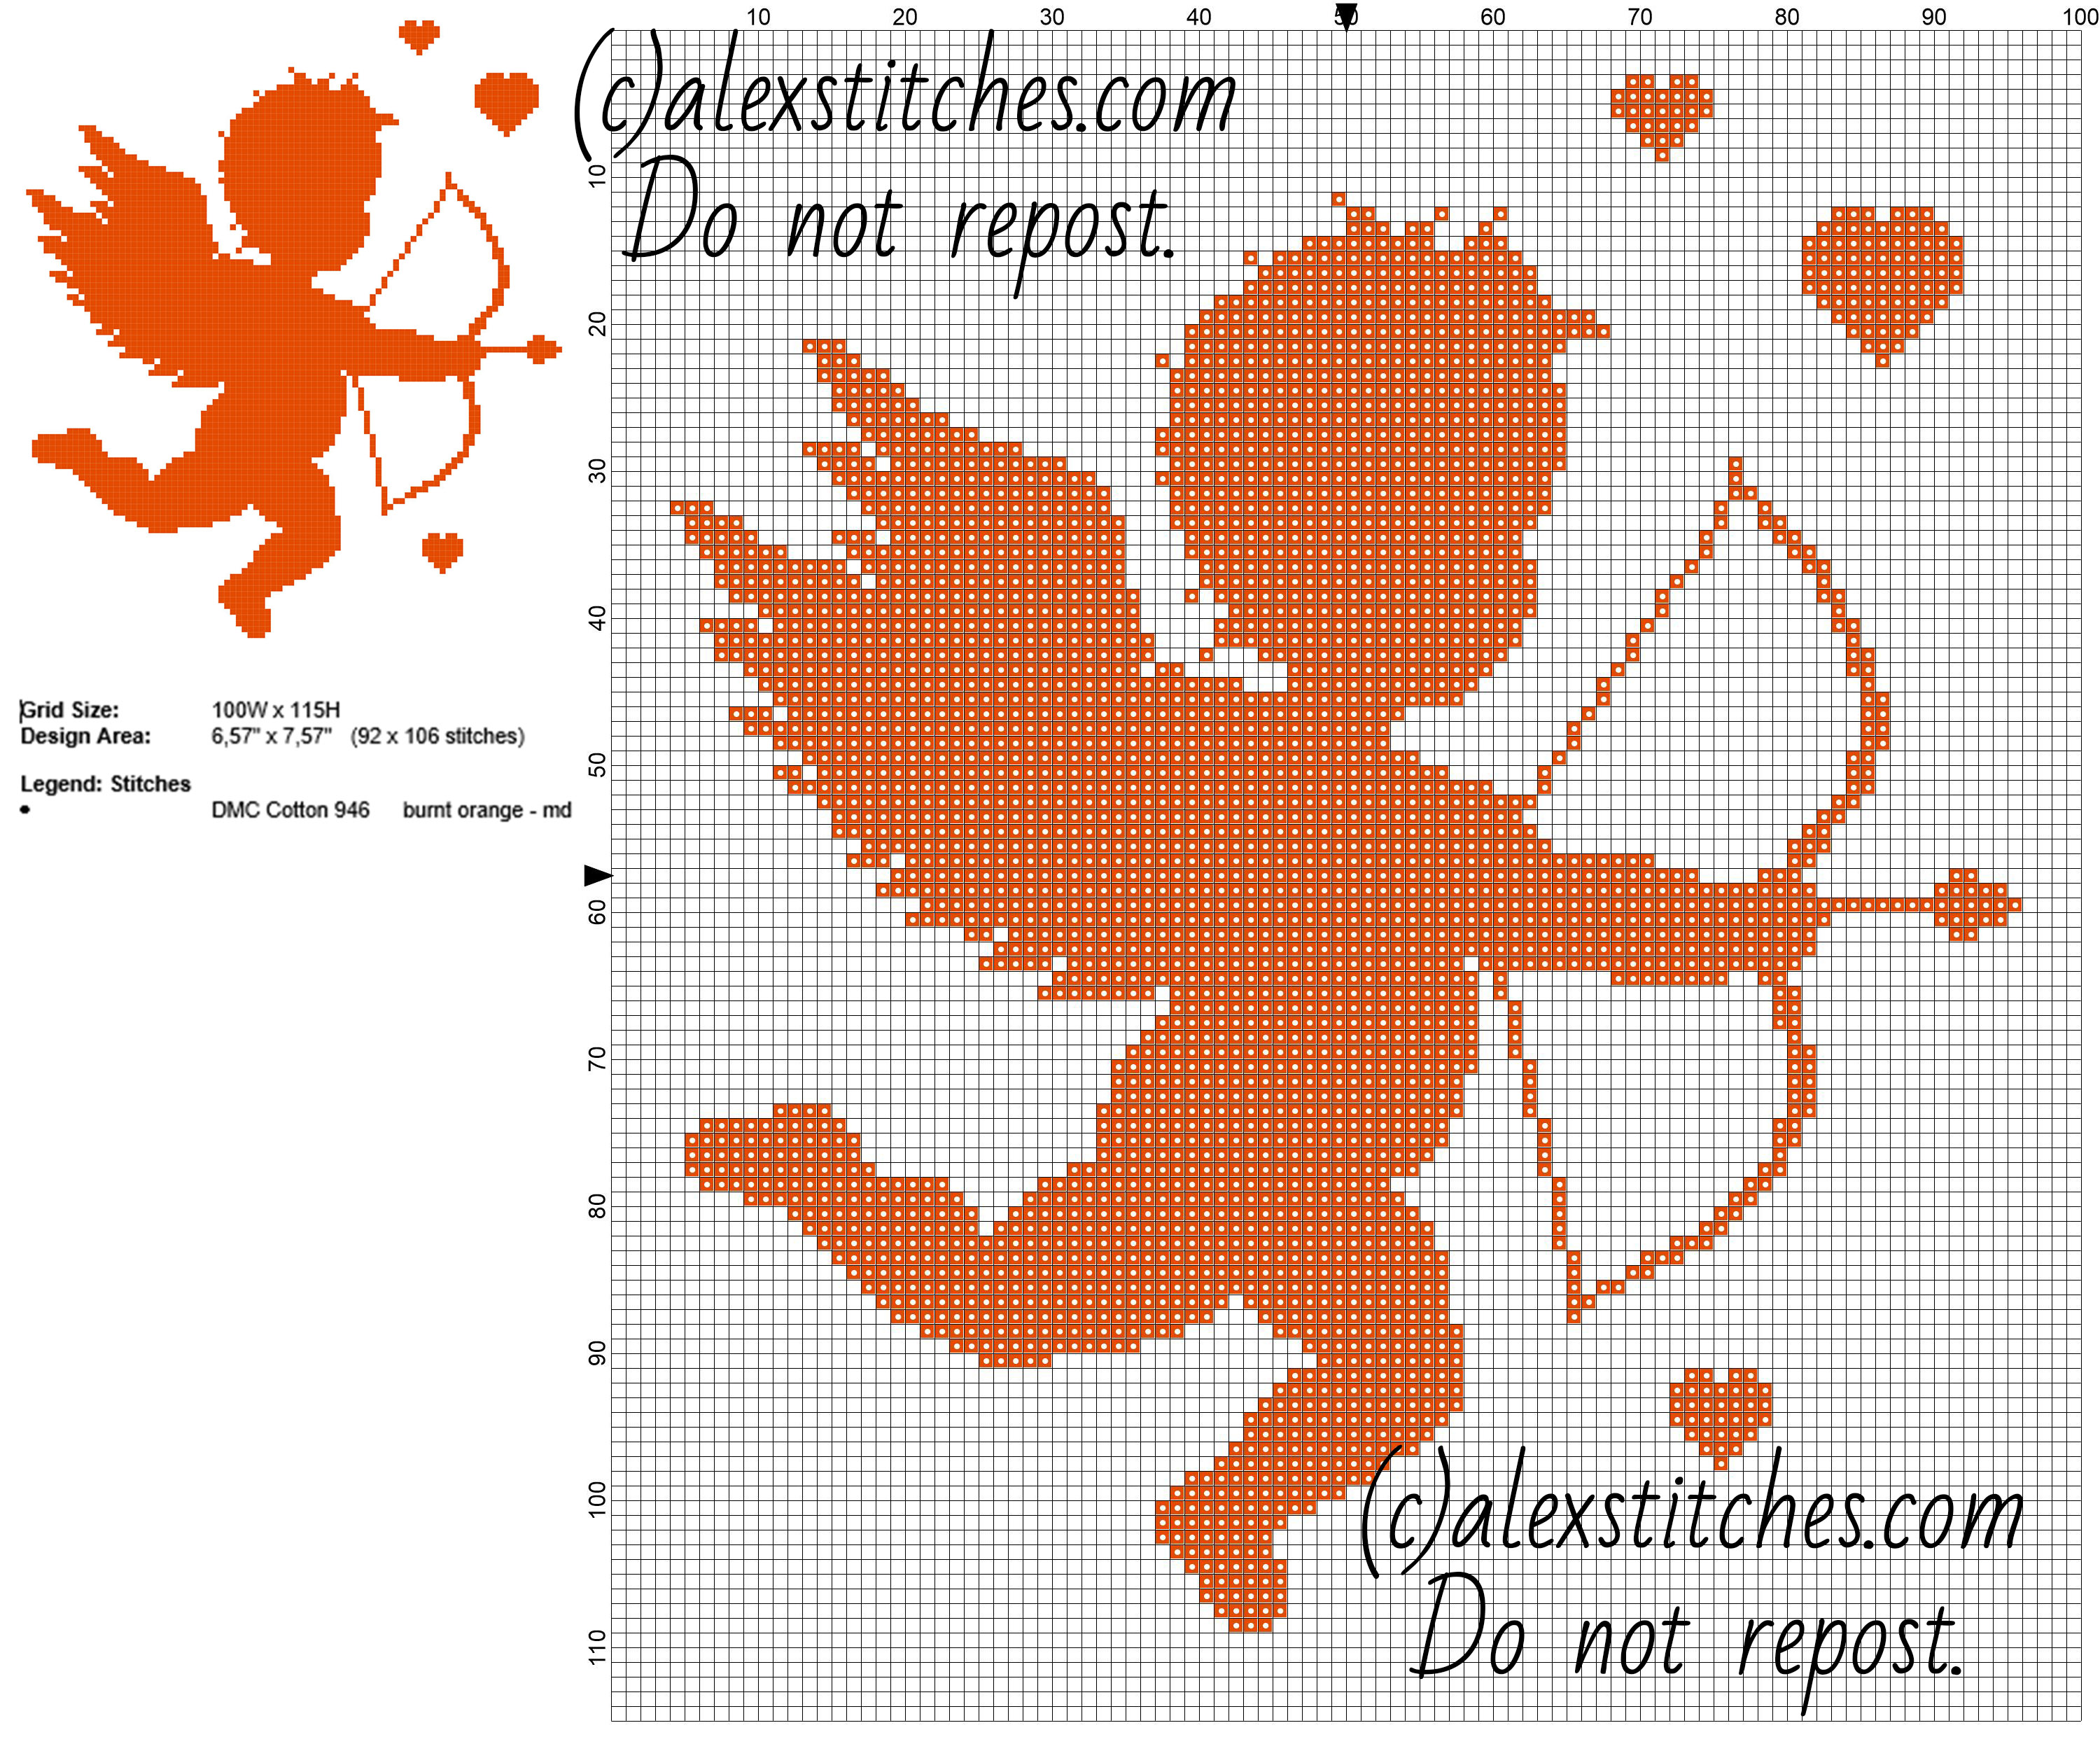 Valentine’ s Day Cupid monochrome free cross stitch pattern 92 x 106 stitches size